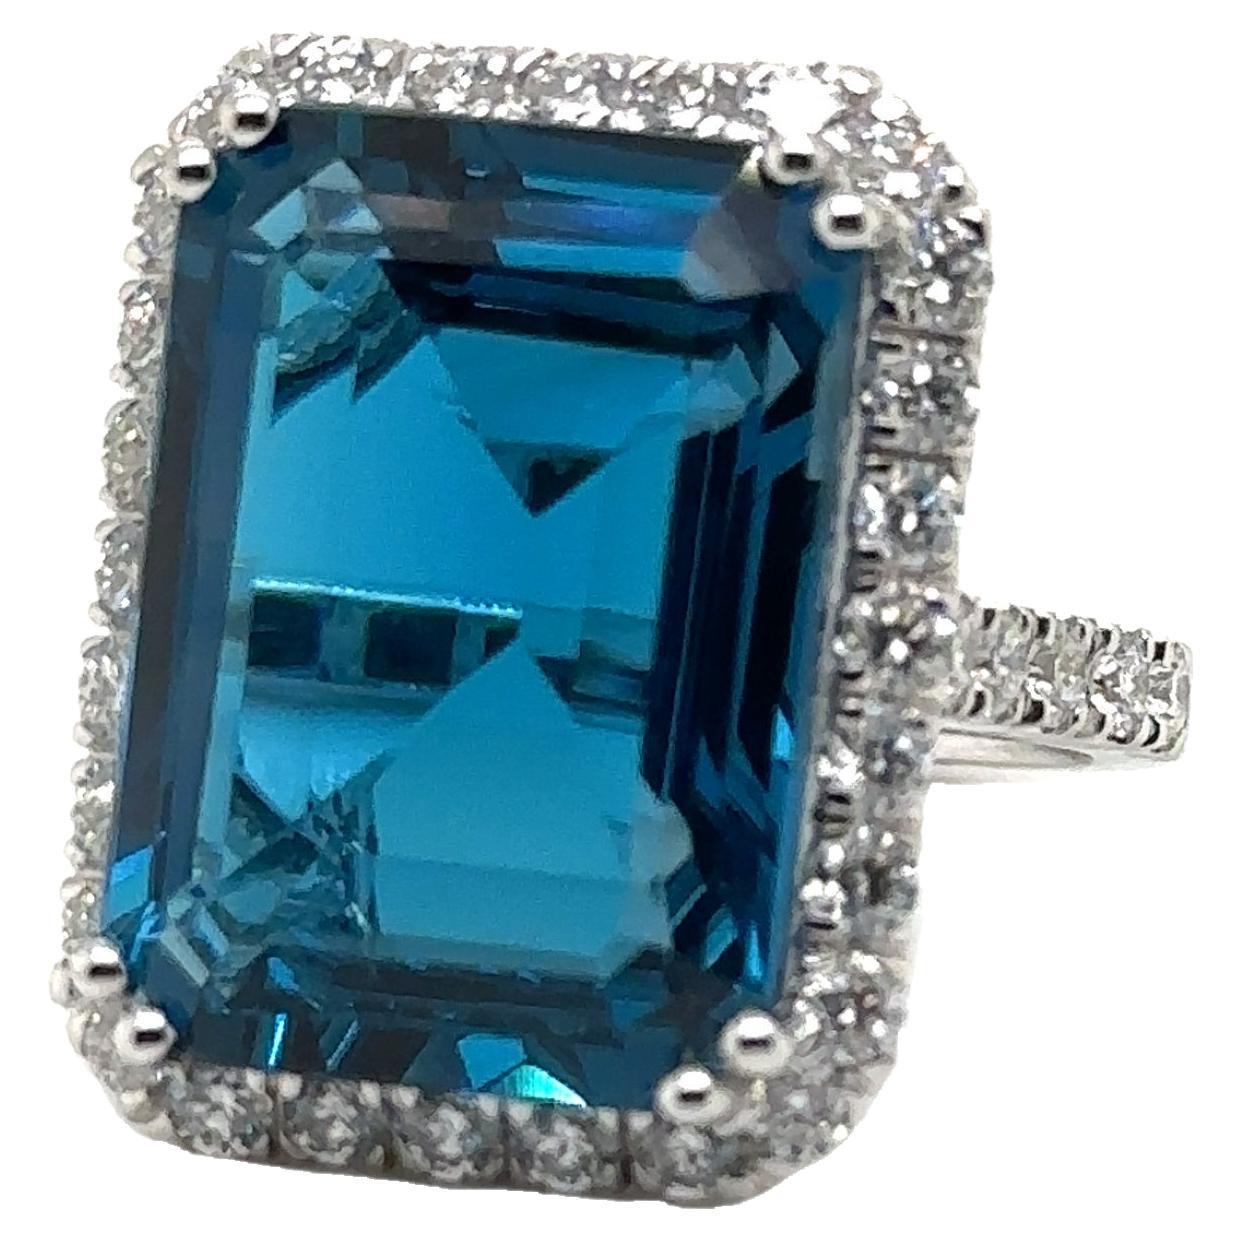 JAS-21-2245 - 14K WG 1.25ct GH-SI1 DIAMONDS & EMERALD CUT LONDON BLUE TOPAZ RING For Sale